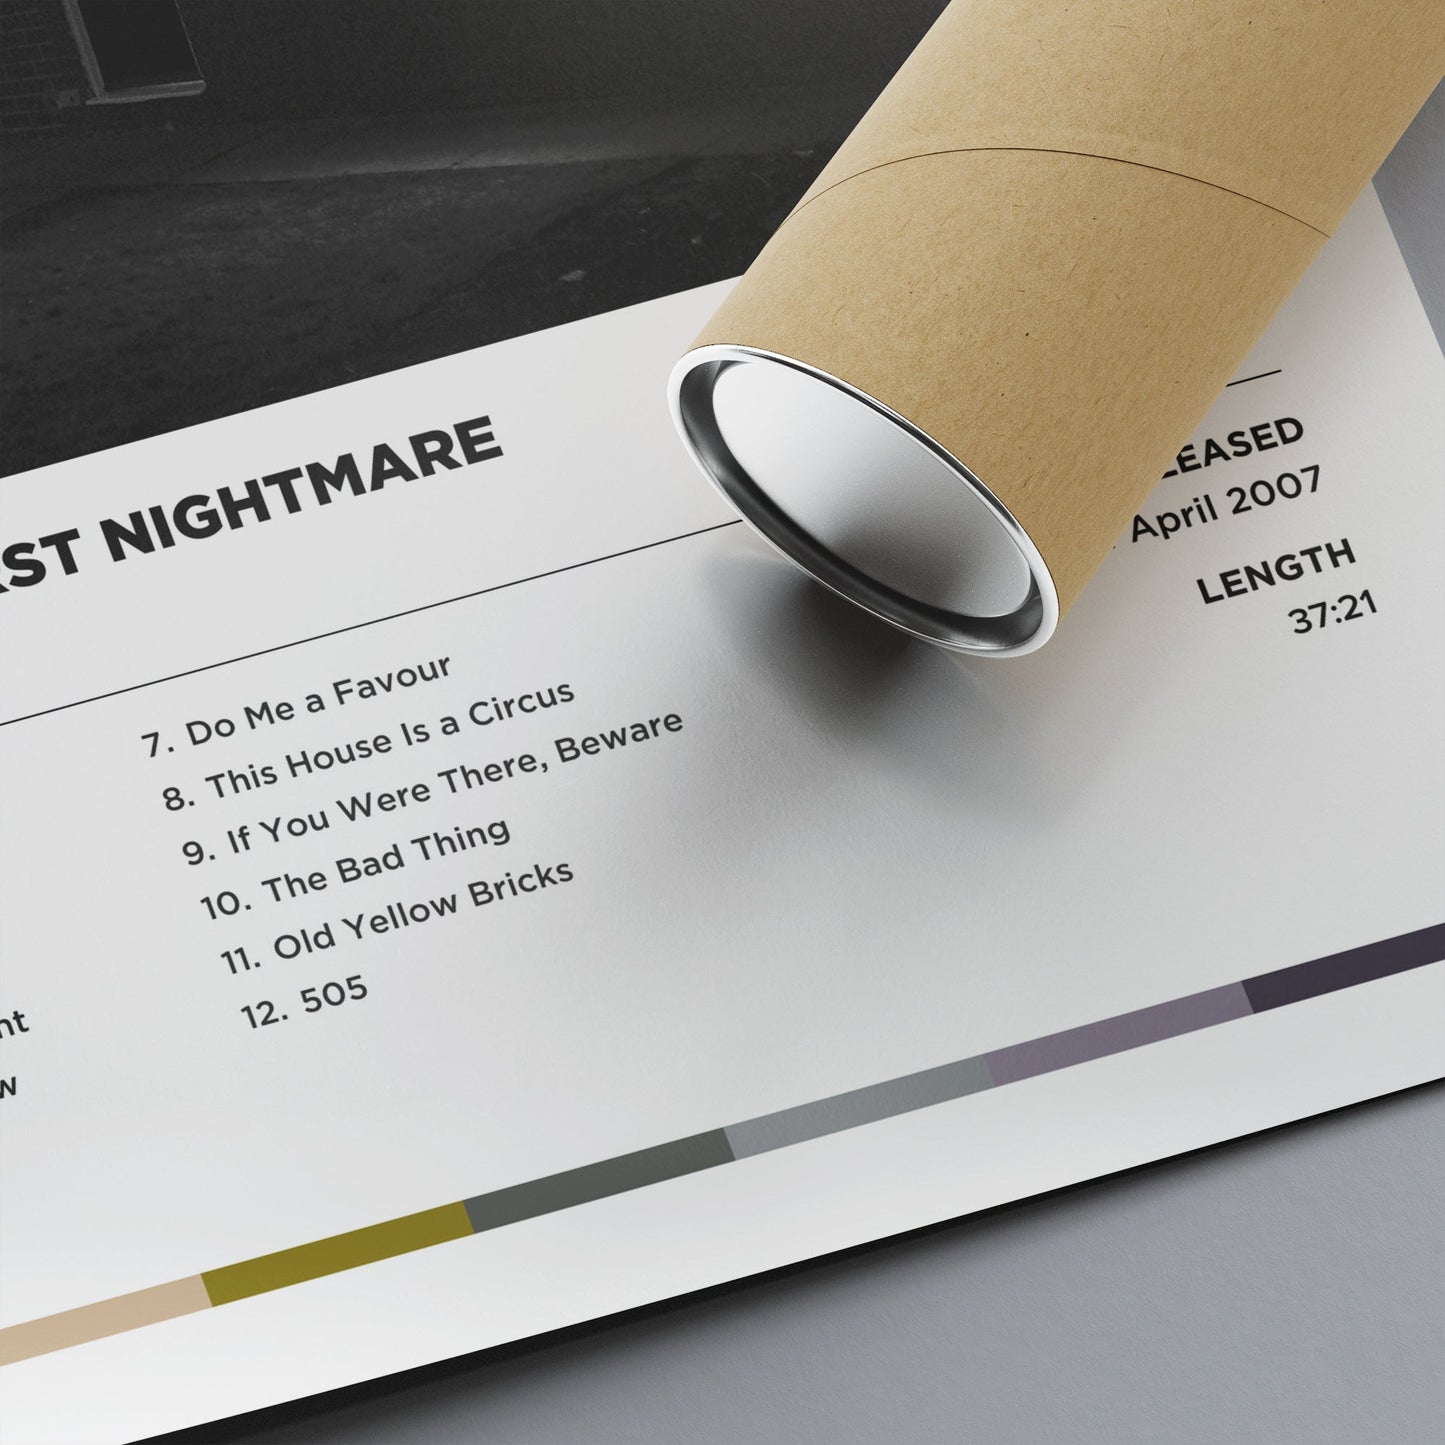 Arctic Monkeys - Favourite Worst Nightmare Poster Print | Framed Options | Album Cover Artwork